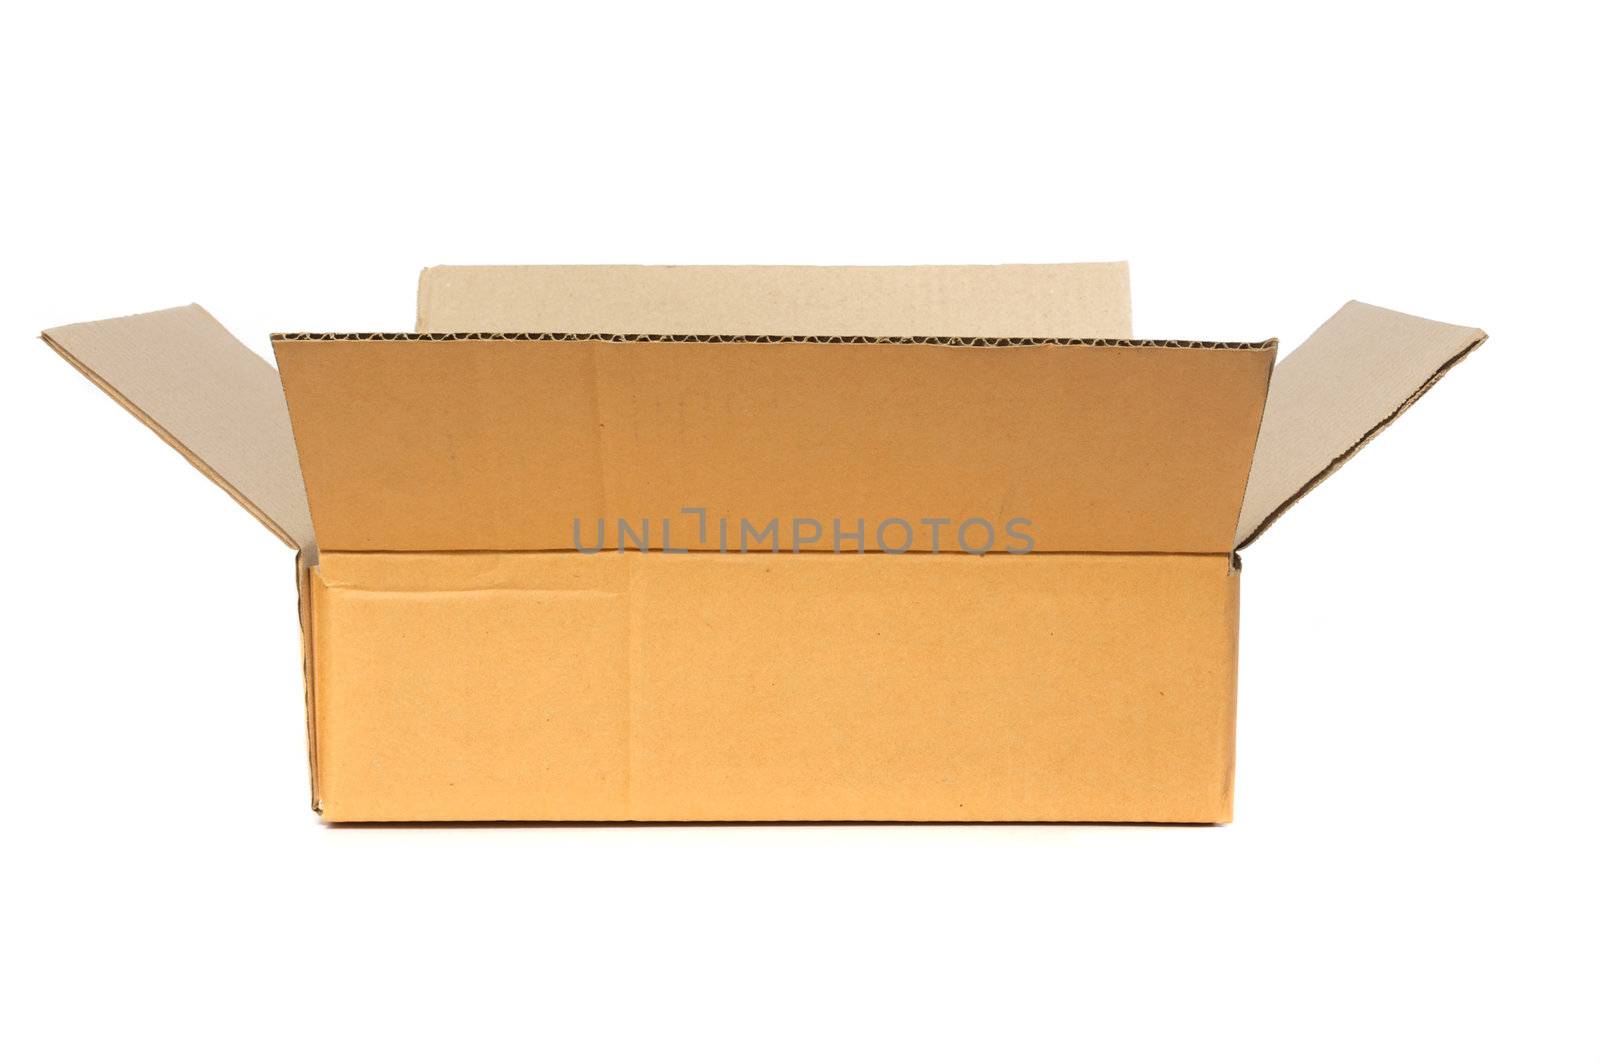 Open Cardboard Box by posterize